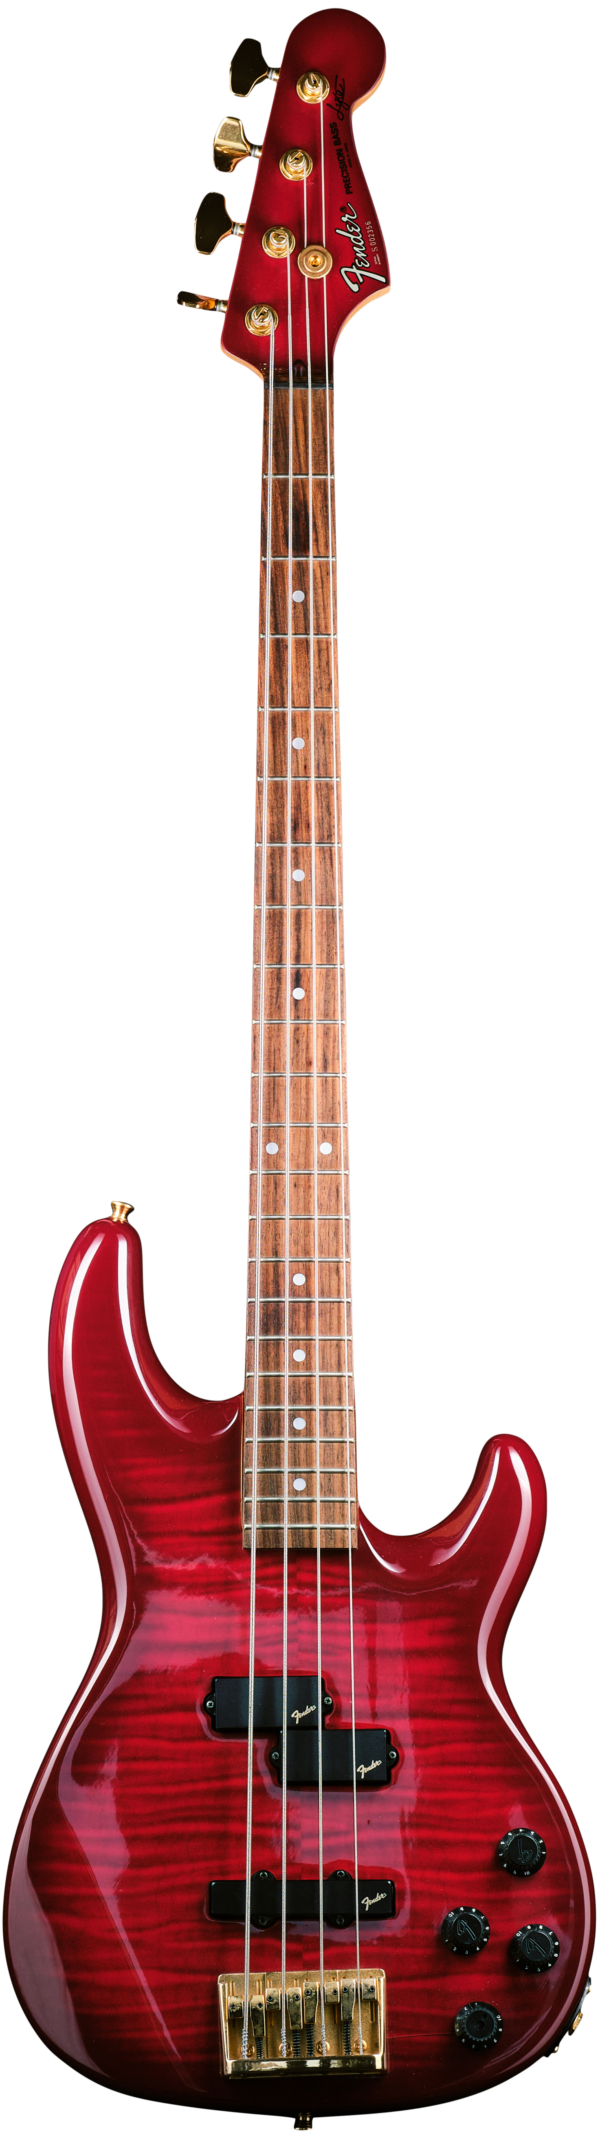 Fender PJ Lyte MIJ 1993 Red Flame Made in Japan